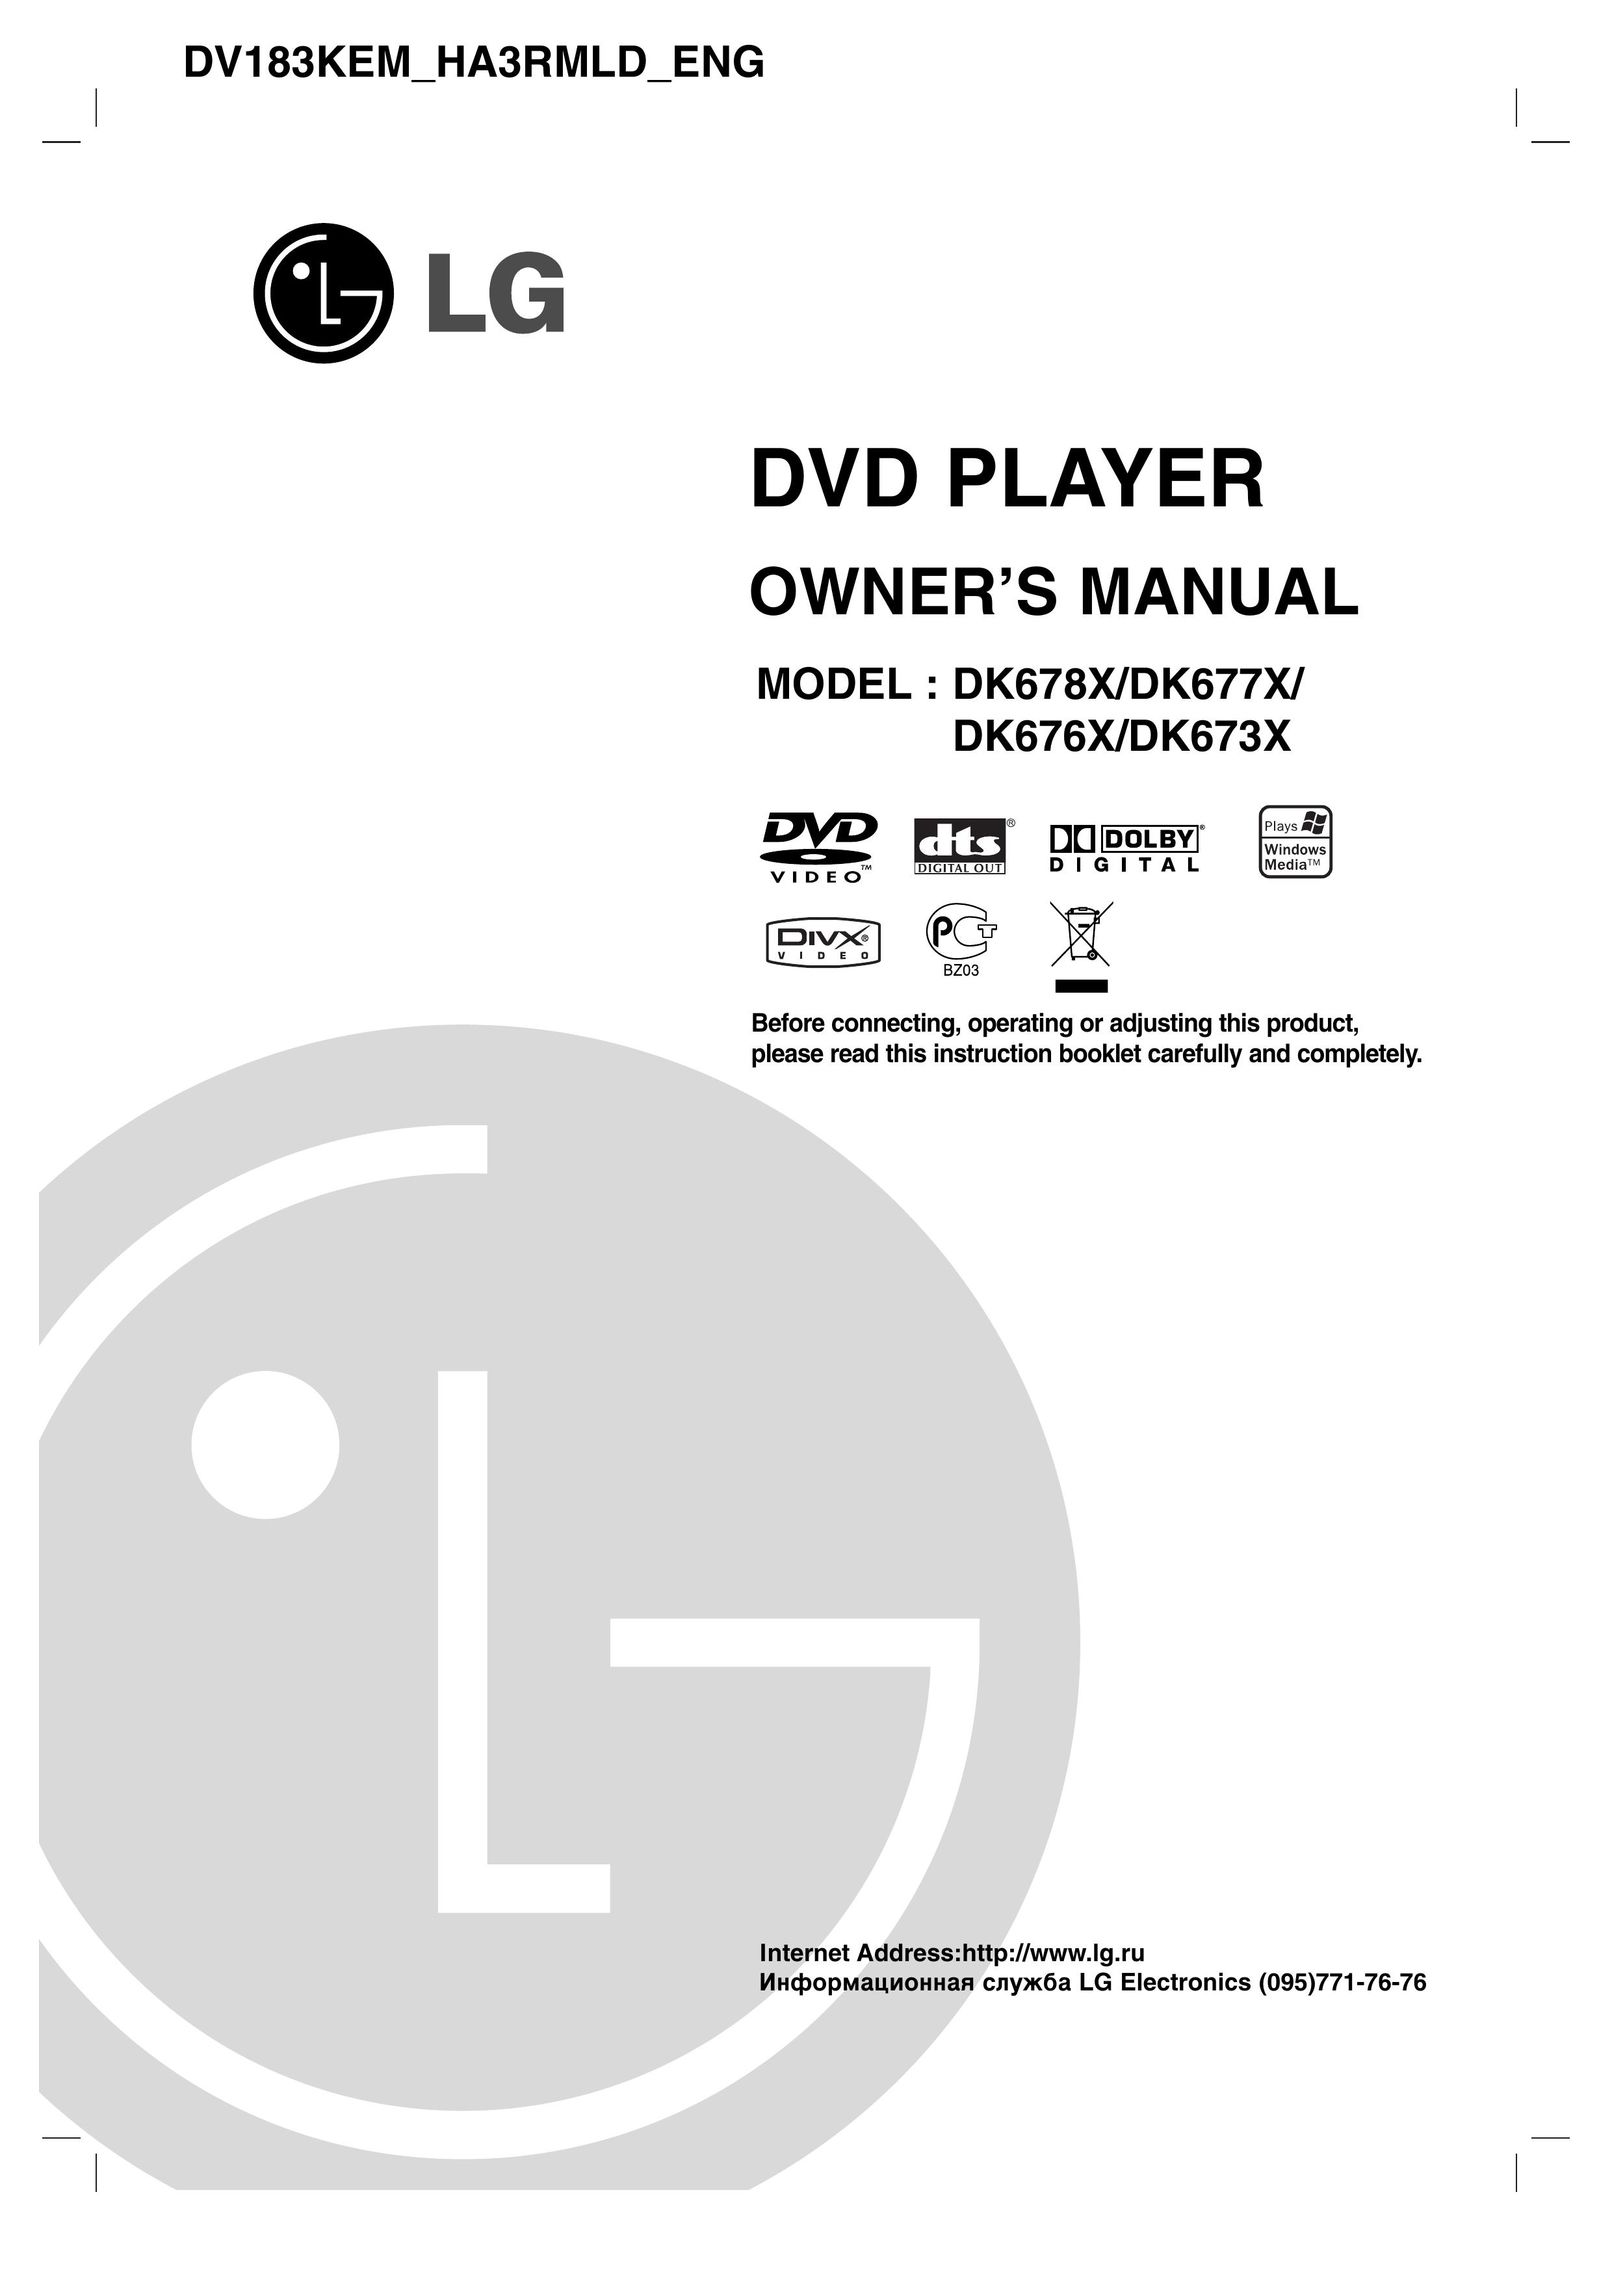 LG Electronics DK673X DVD Player User Manual